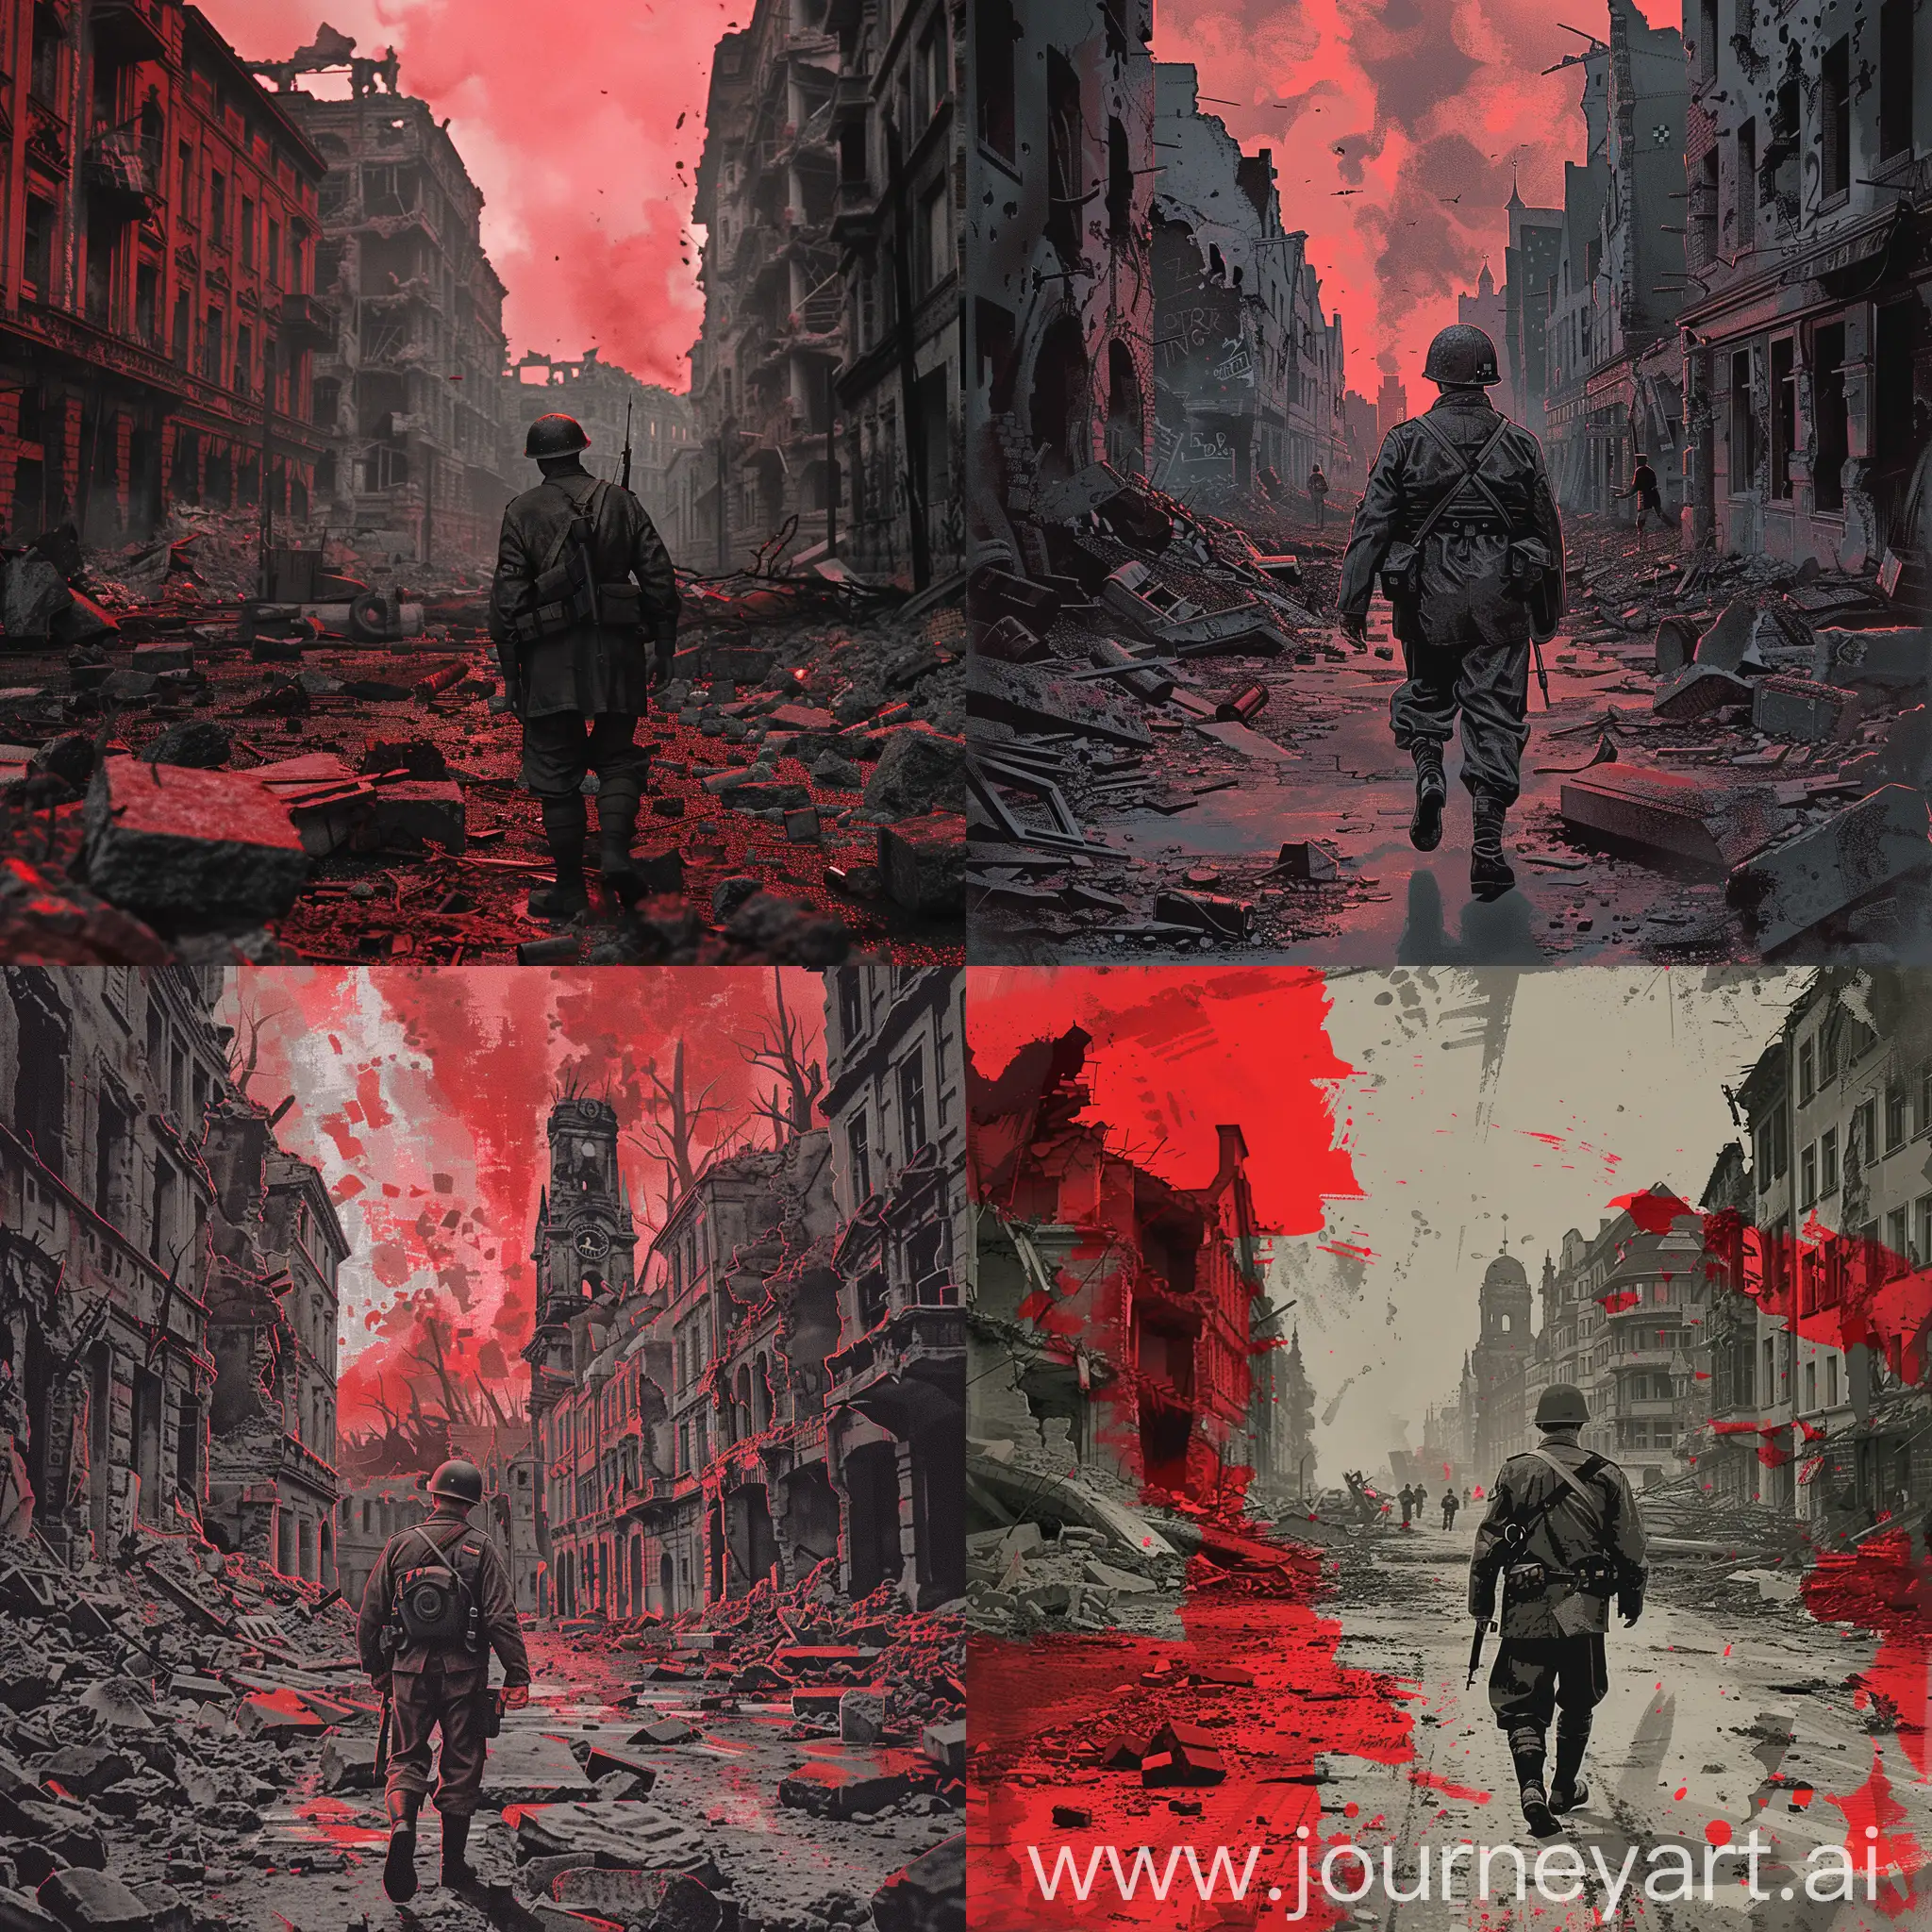 German-Soldier-Walking-Through-Ruined-WW2-Era-Streets